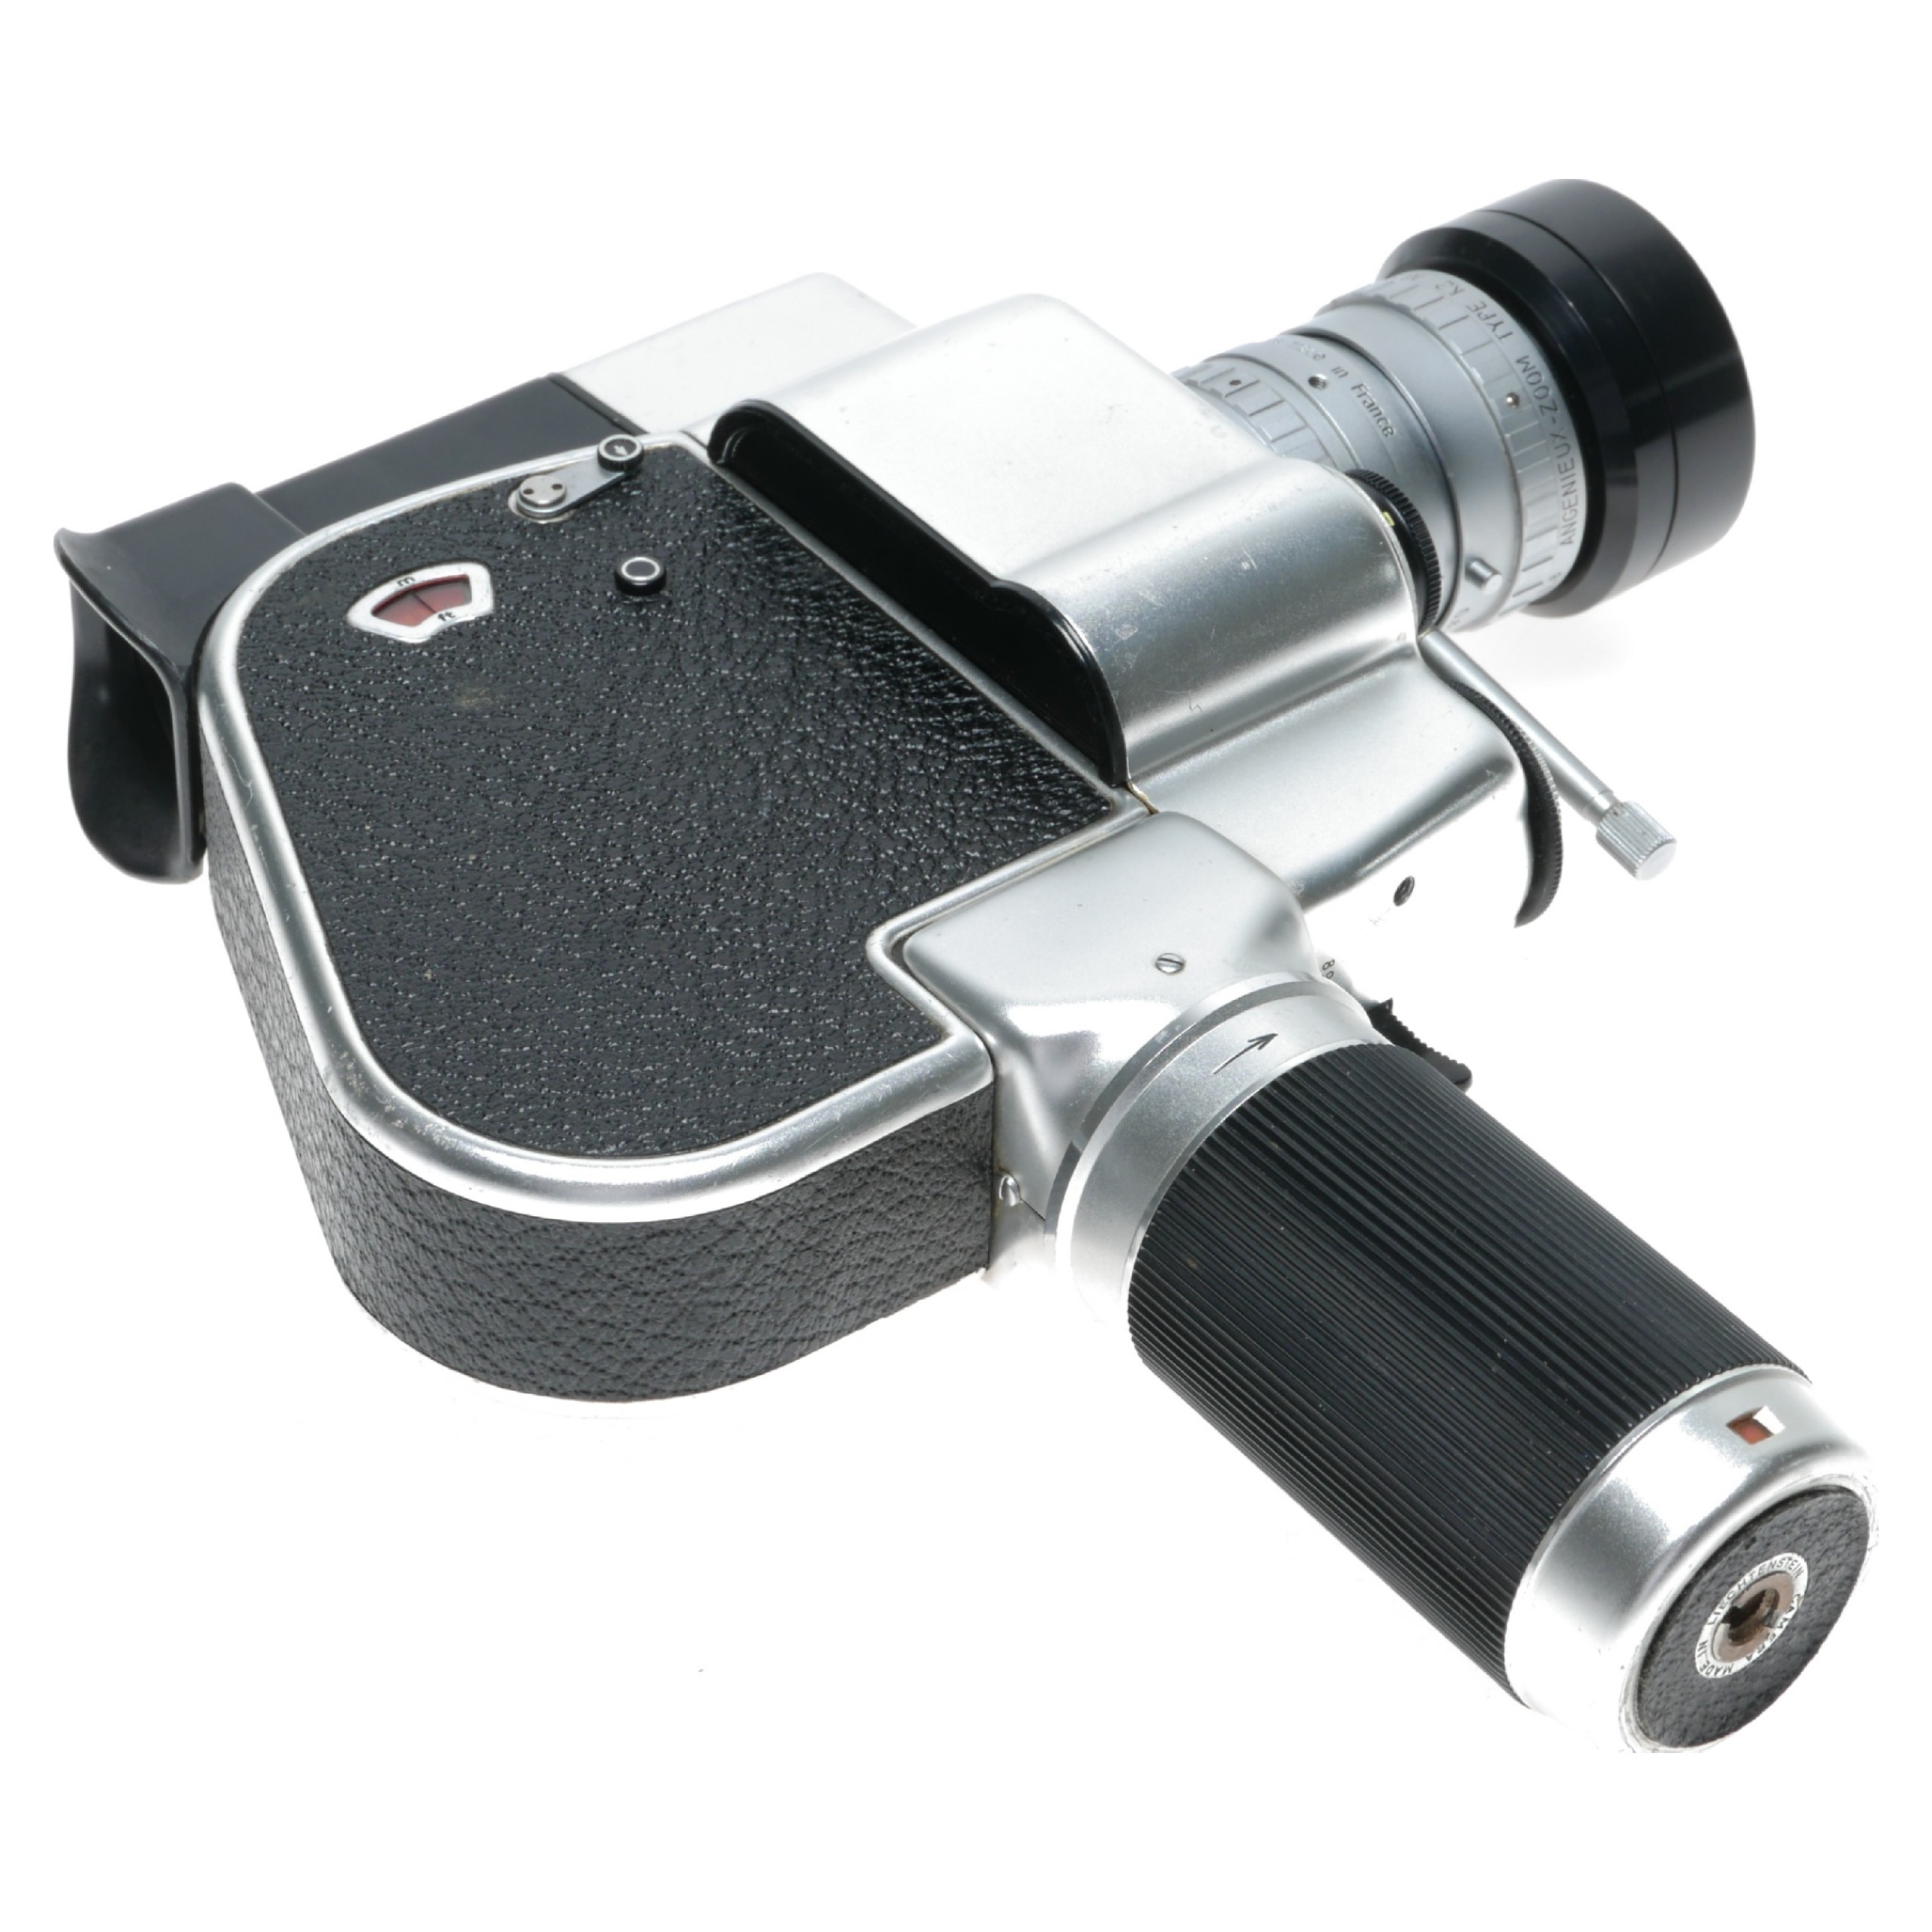 Carena Gevaert Zoomex Camera Angenieux 7.5-35mm 1:1.8 Type K2 Lens